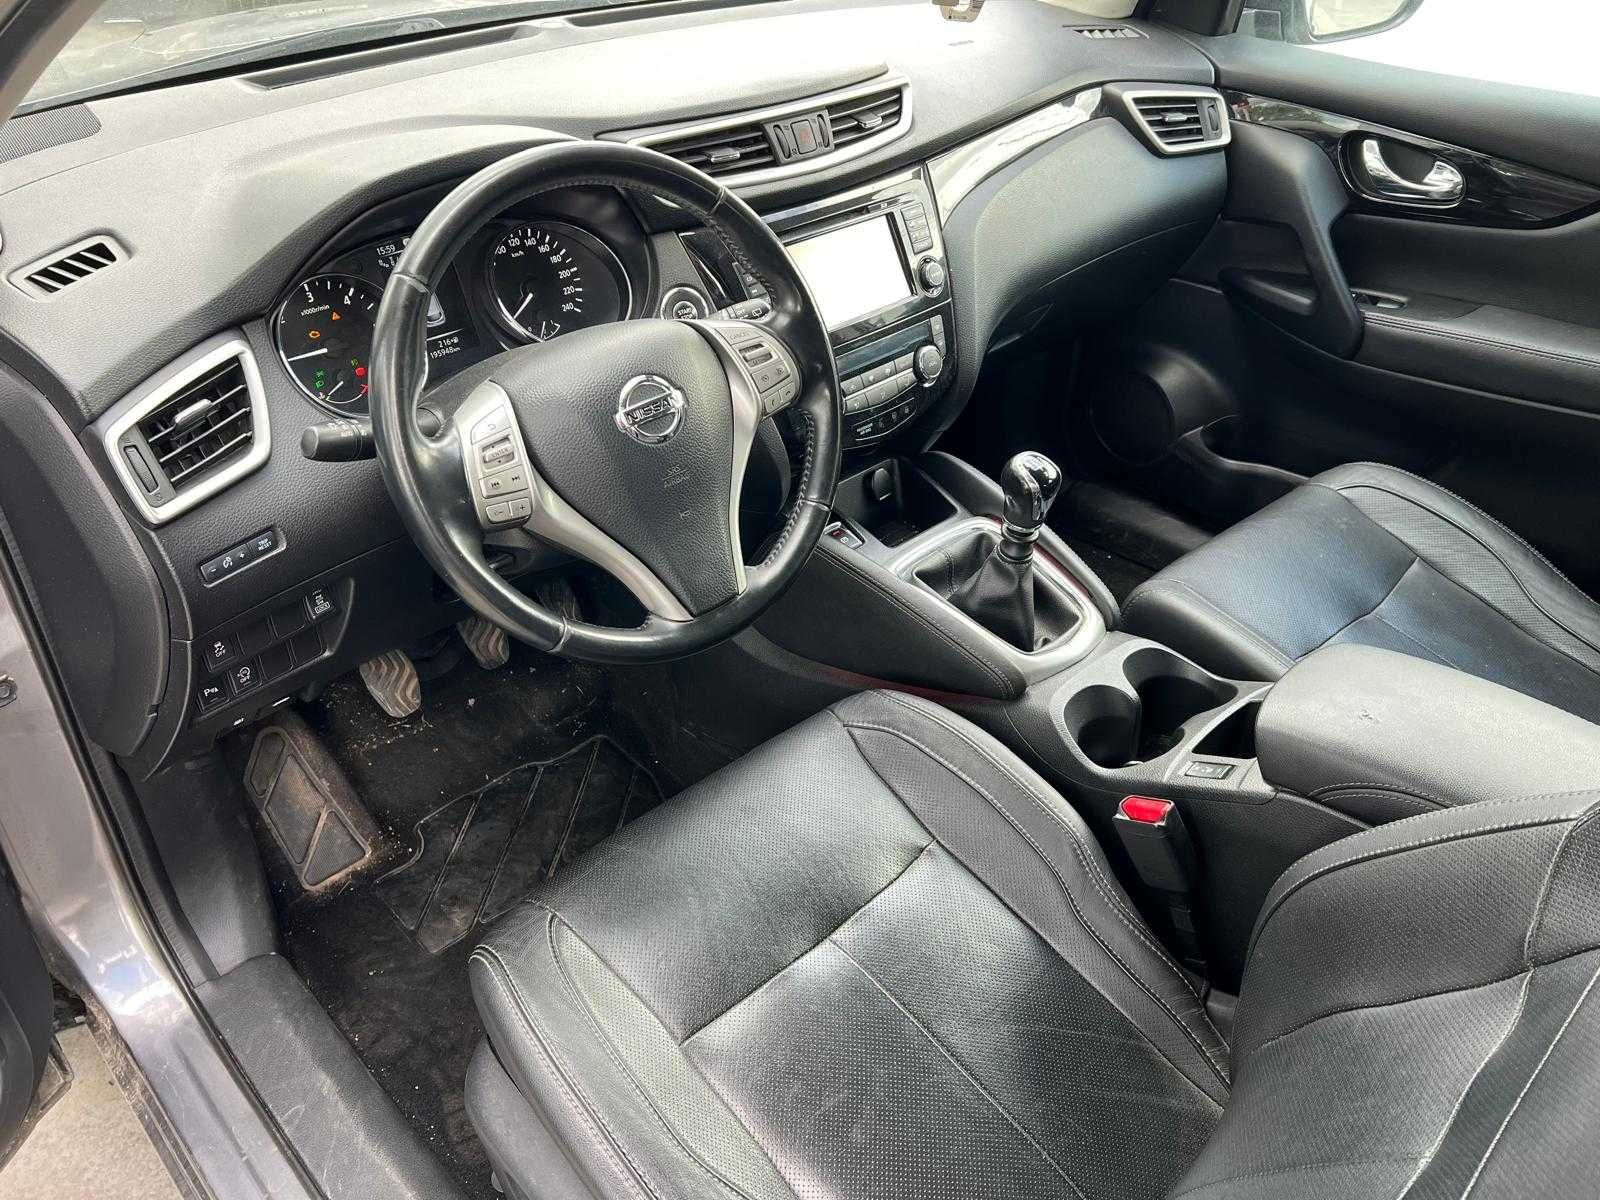 Nissan Qashqai 2015 130CP 4x4 1.6DCi Camere 360 piele AVARIAT!